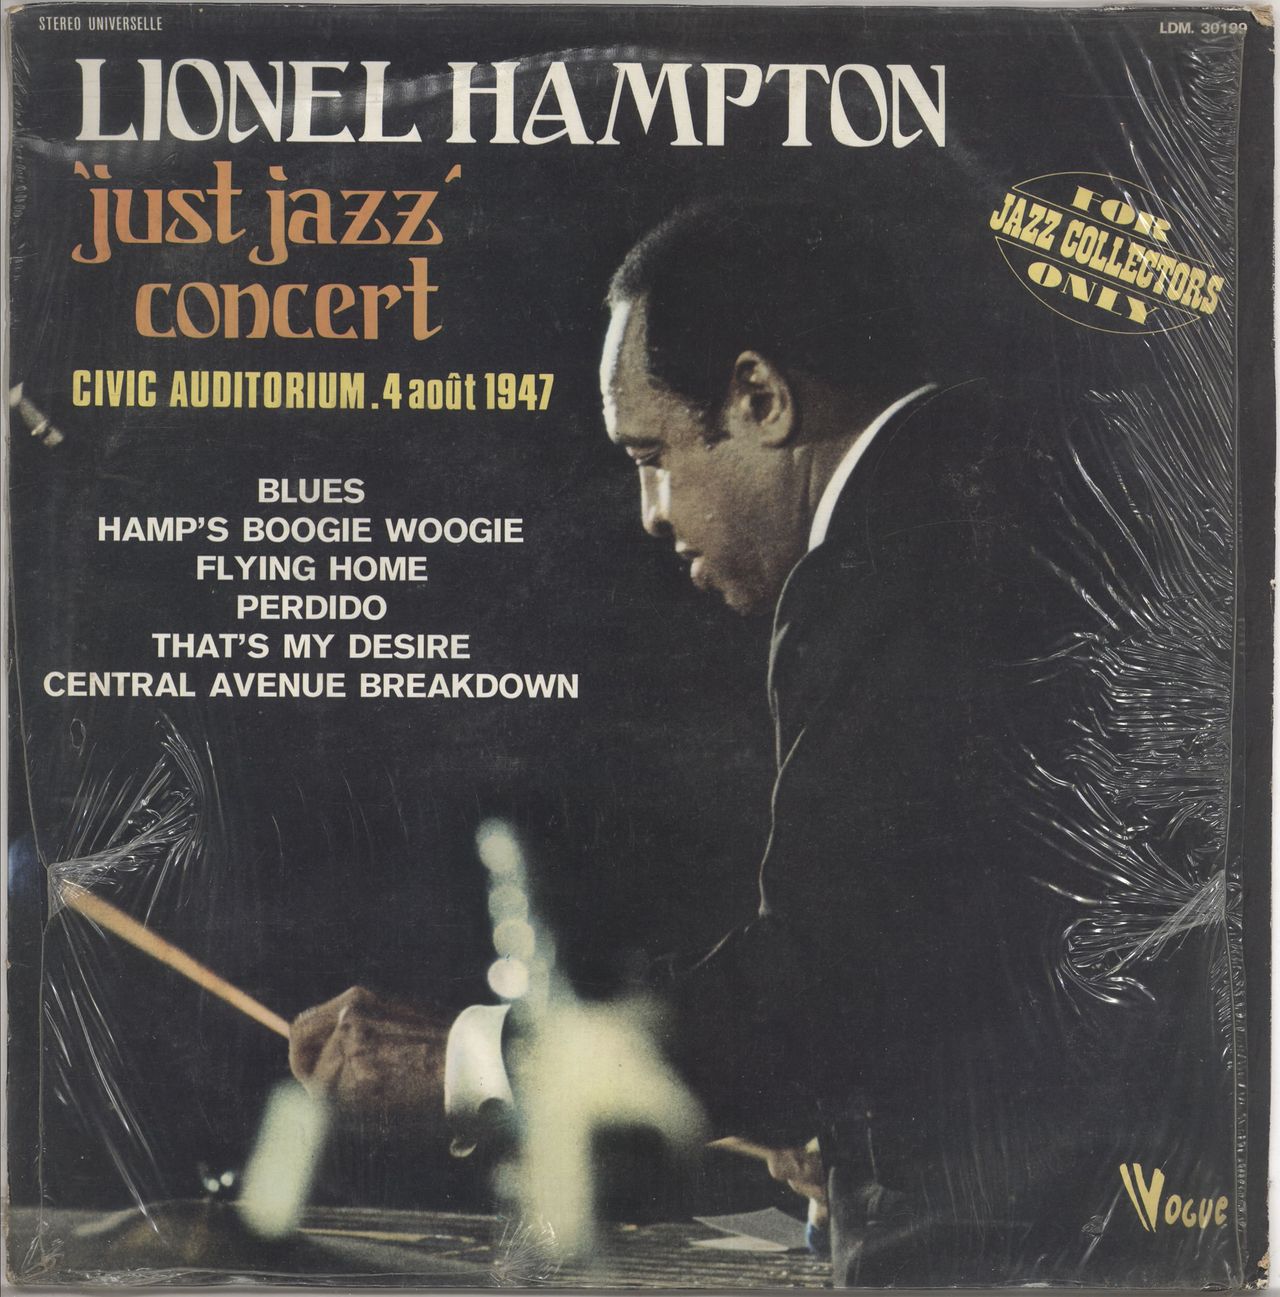 Lionel Hampton 'Just Jazz' Concert French vinyl LP album (LP record) LDM.30199